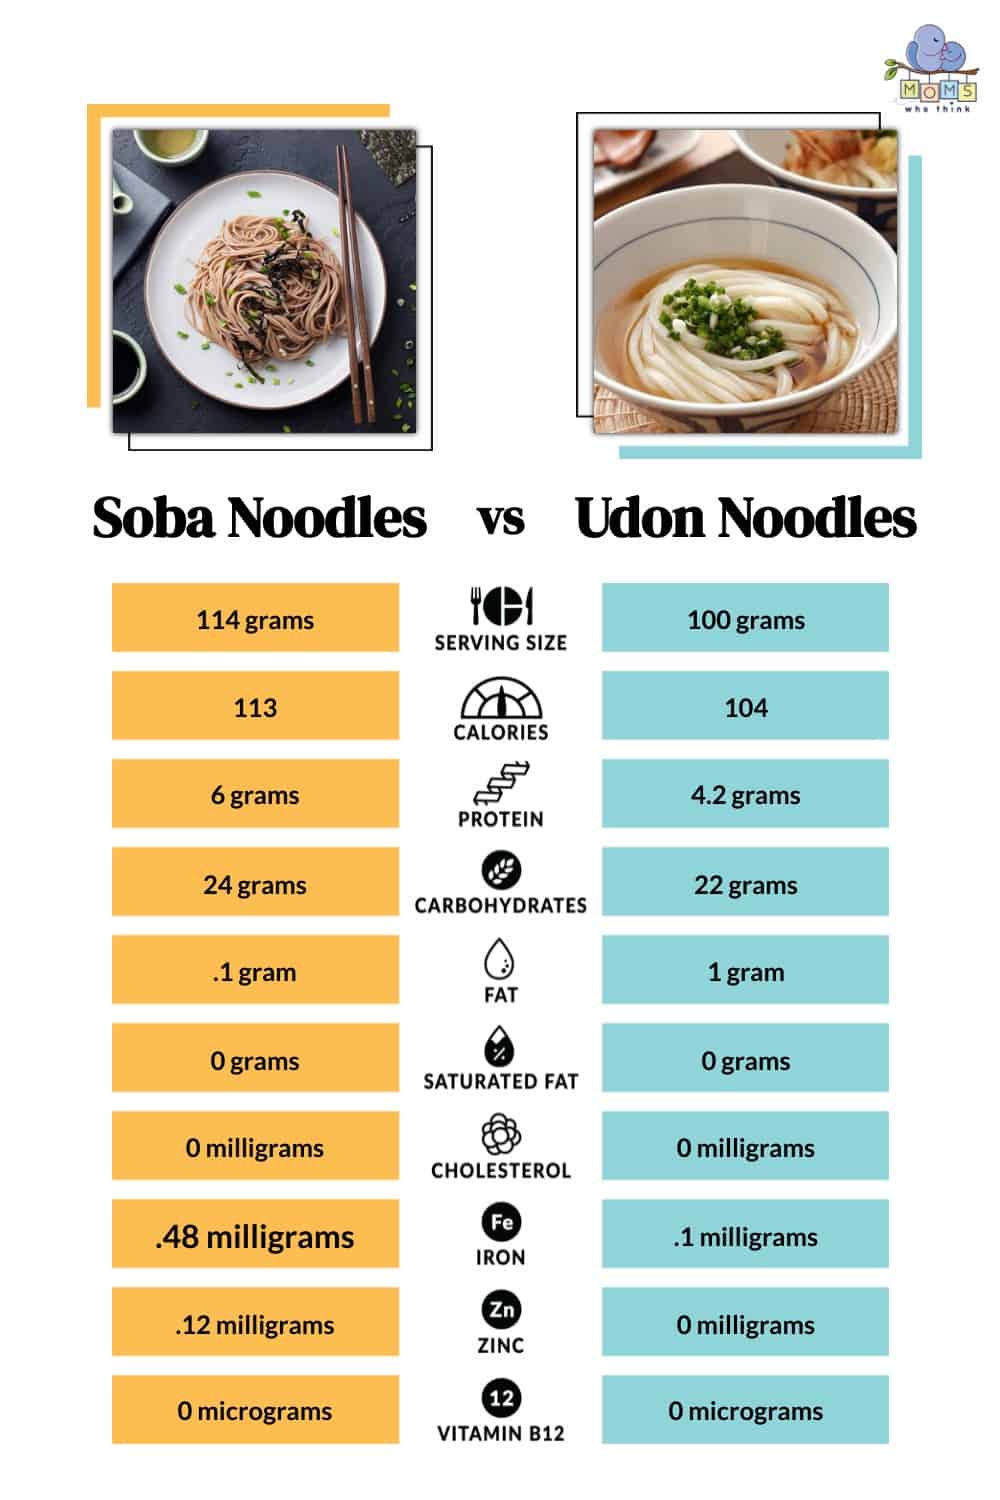 Soba Noodles vs Udon Noodles: Which is Healthier